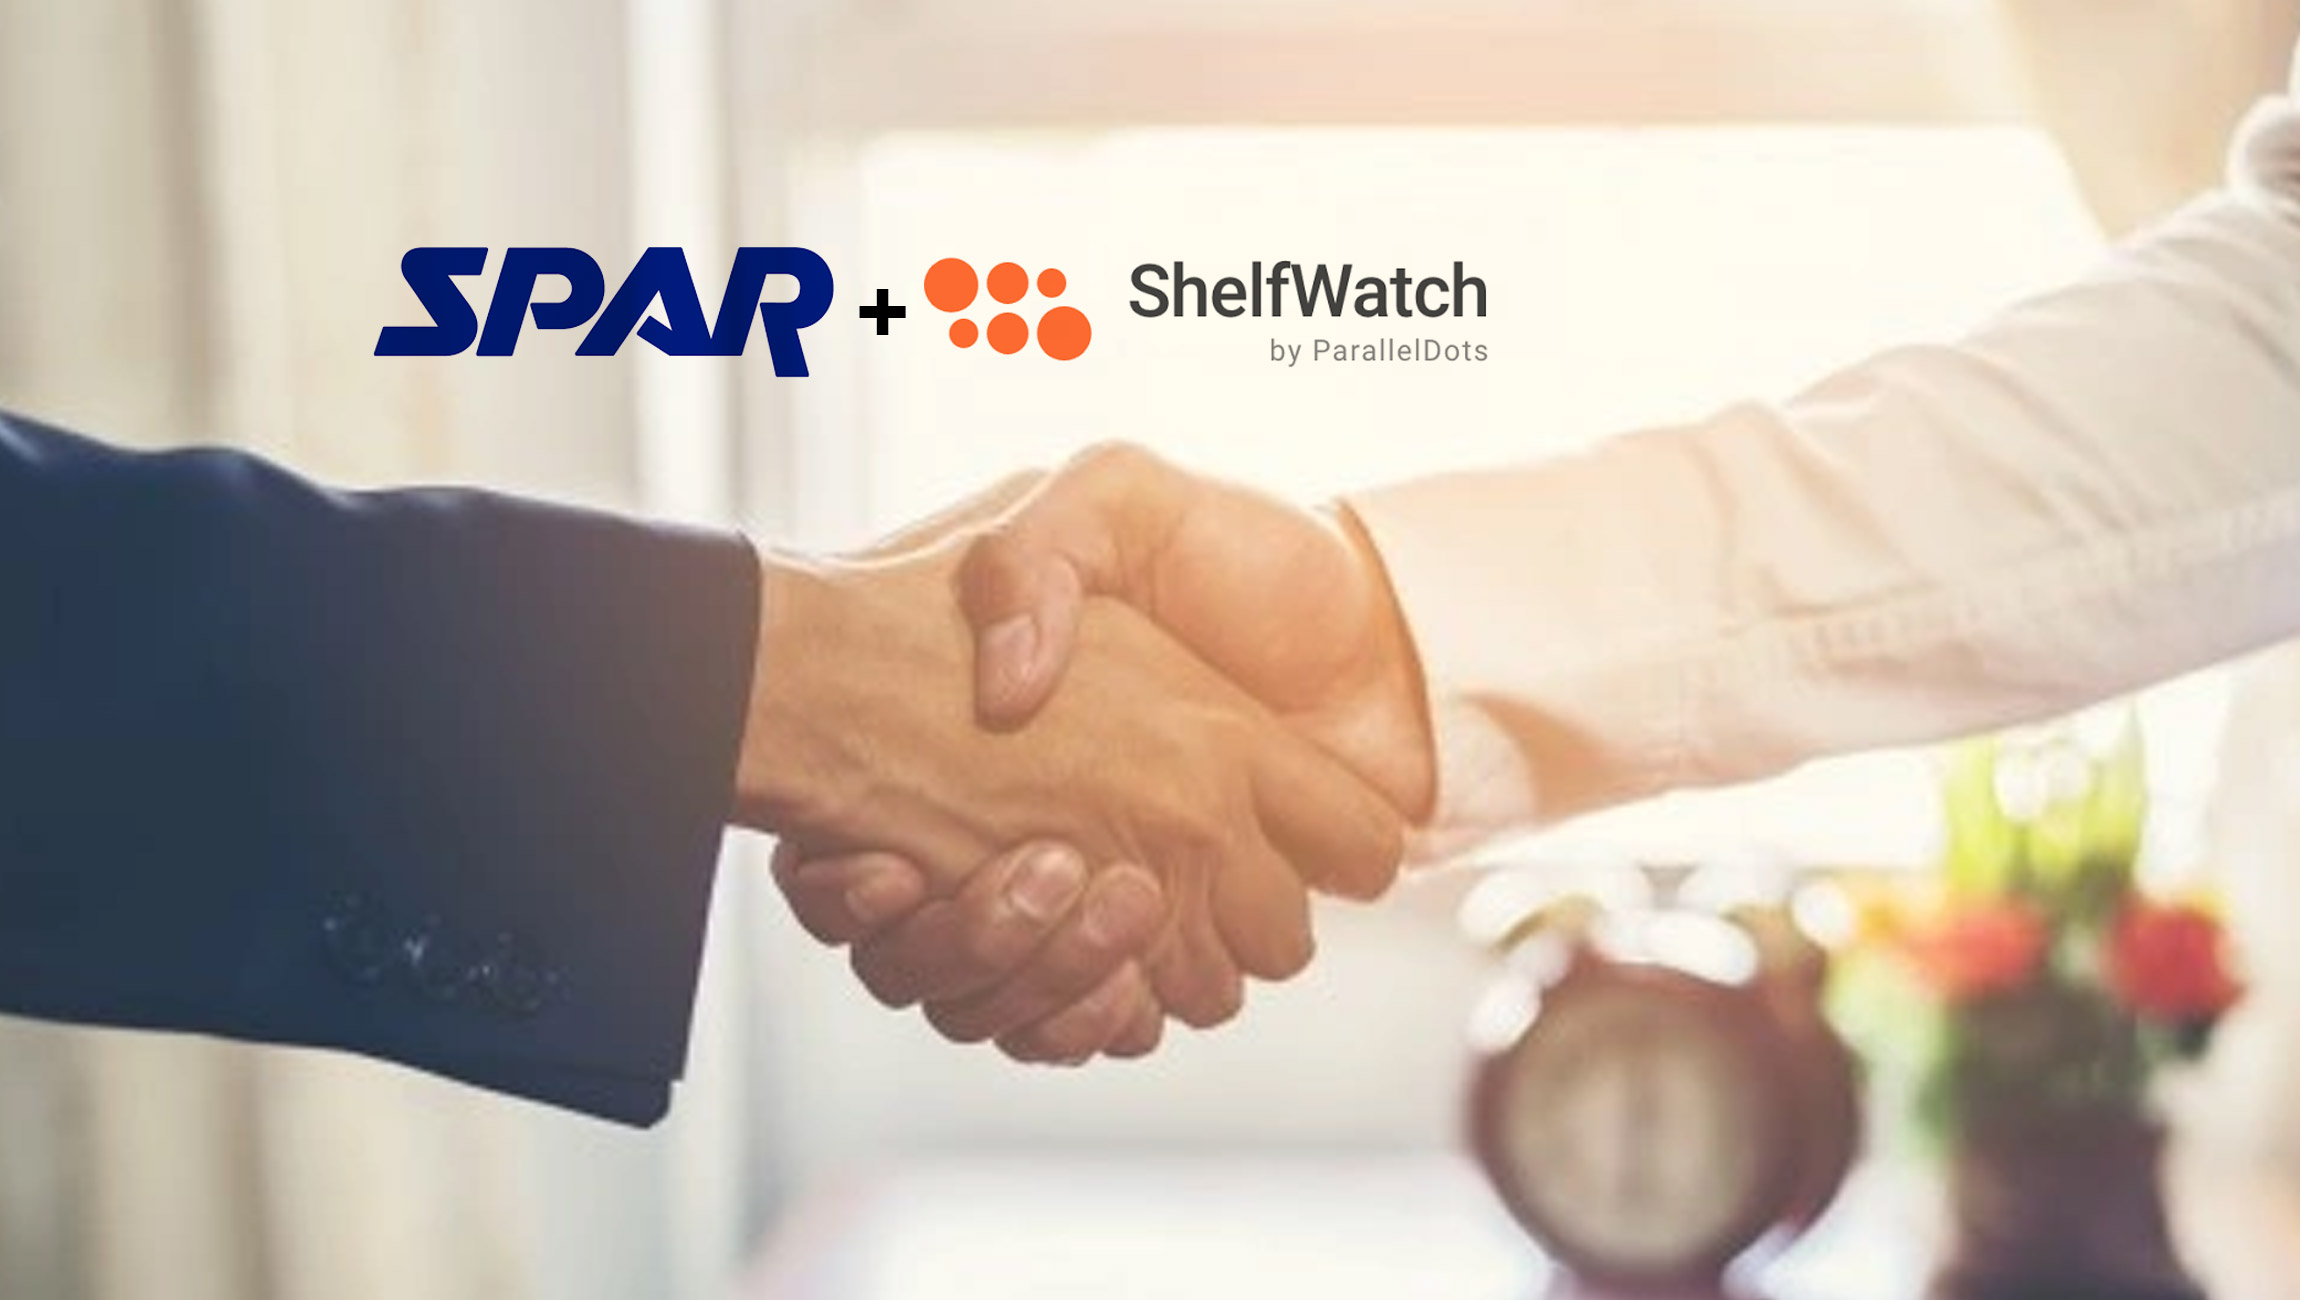 SPAR Group Announces a Global Partnership with ParallelDots, Inc.